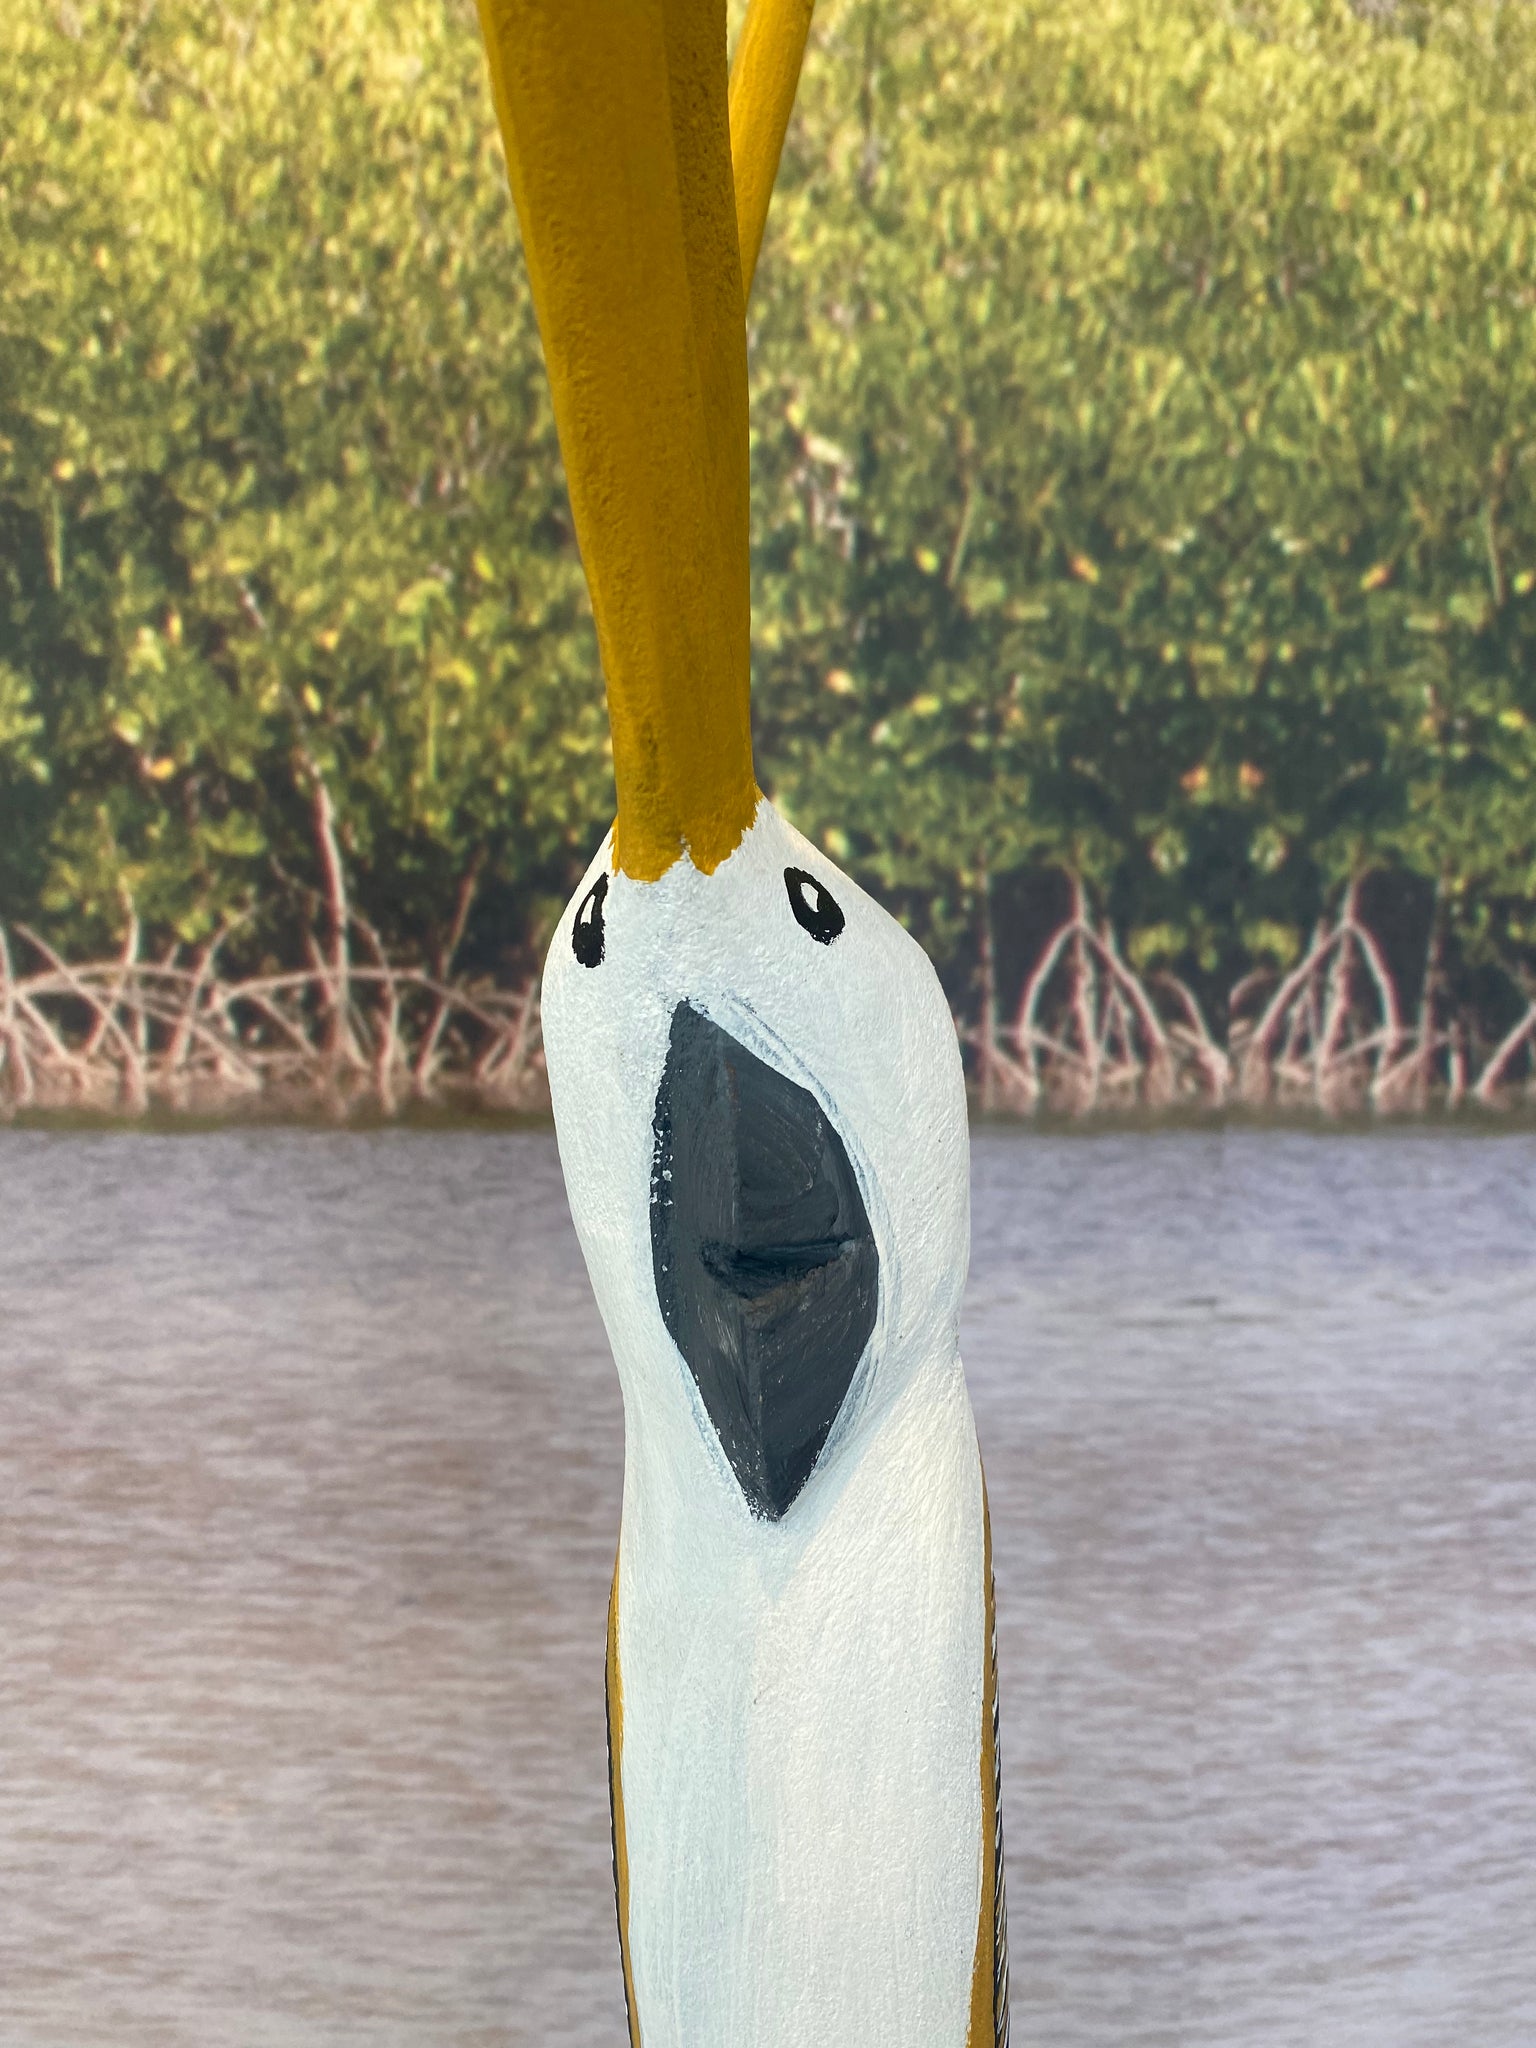 22. Ngarradj (Sulphur Crested Cockatoo)